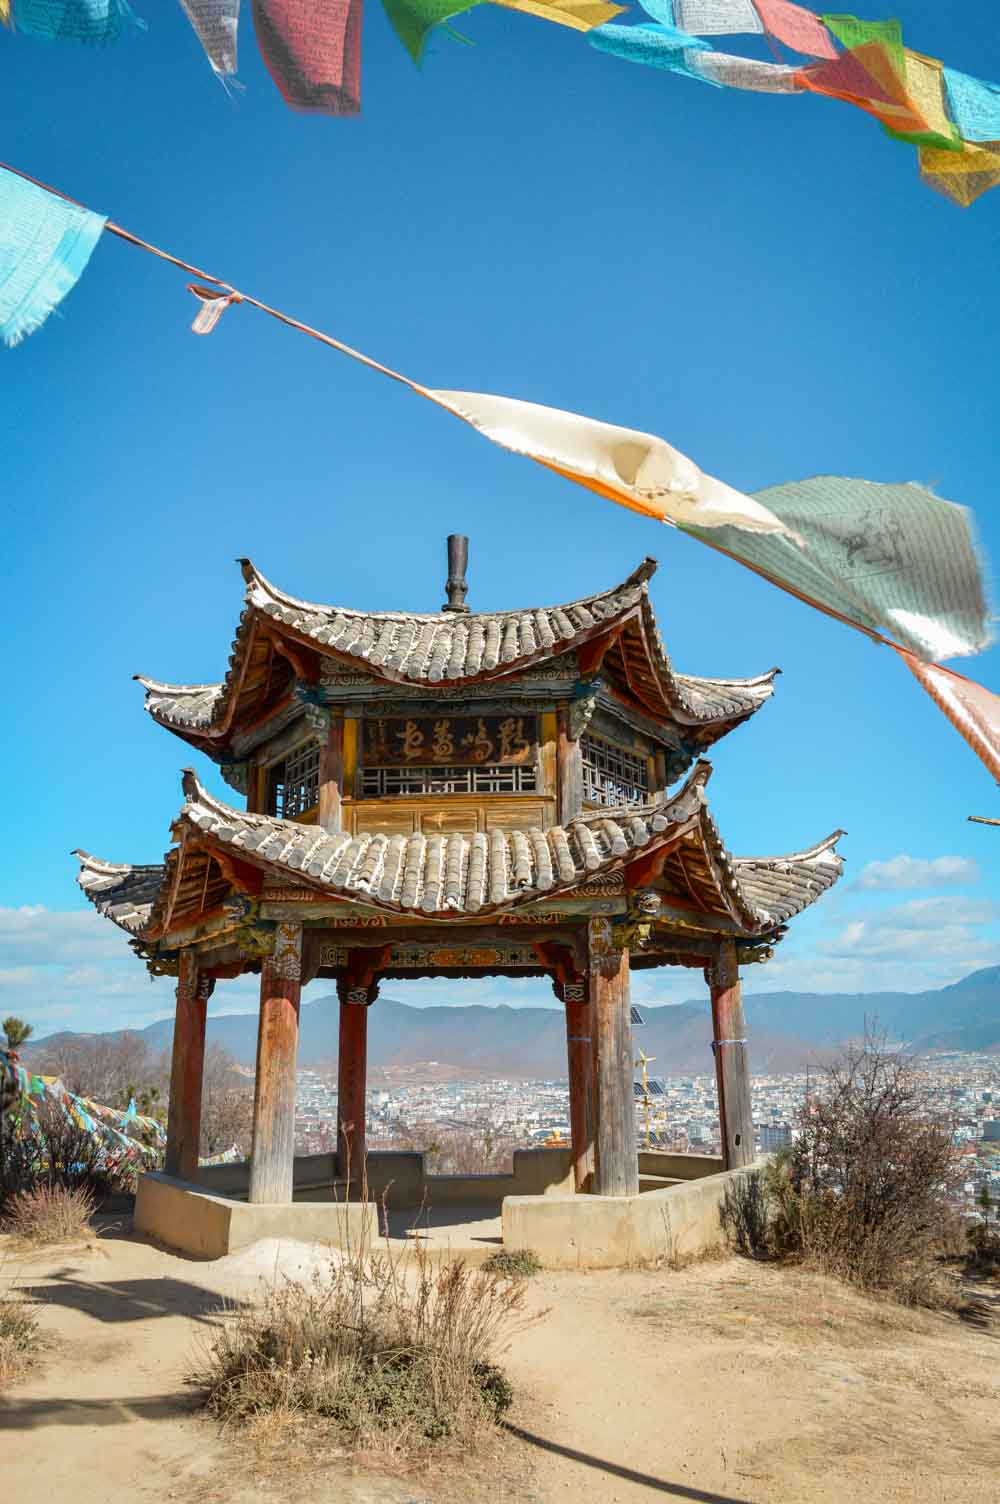 shangri-la existe tibet china mirante vista do alto